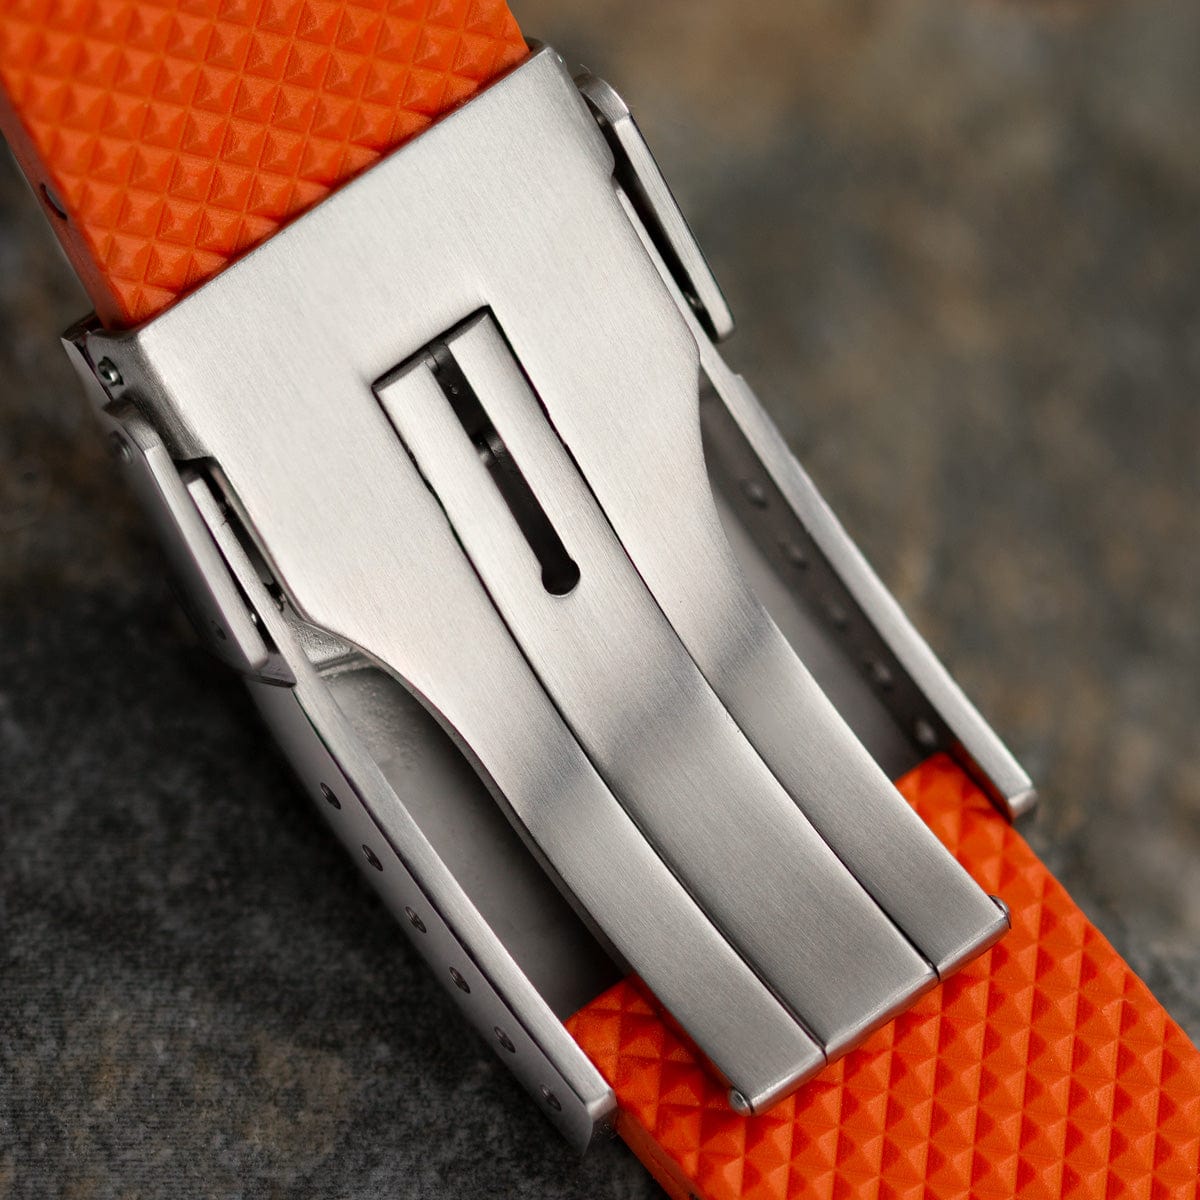 WatchGecko 300 (MKII) Italian Rubber Watch Strap - Orange